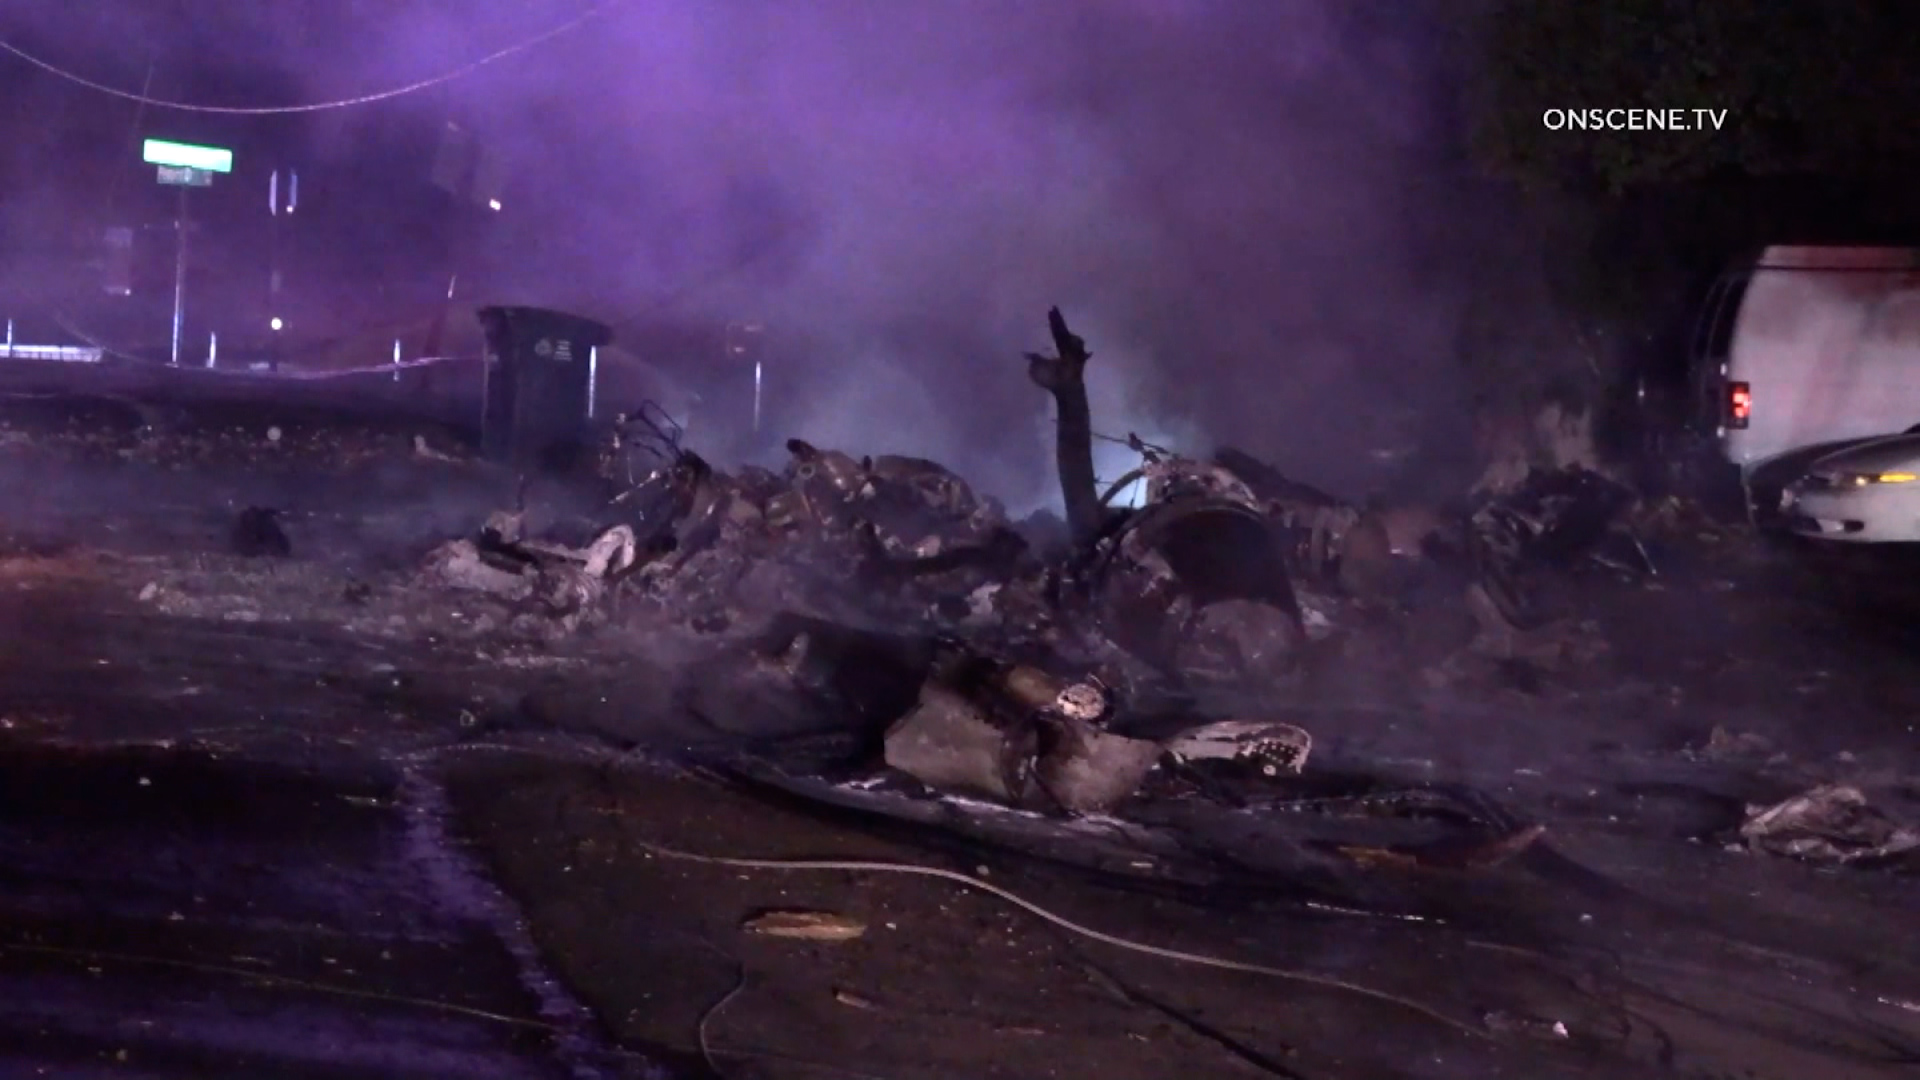 Wreckage of a plane crash covers a street in El Cajon, California. Photo: ONSCENE.TV...